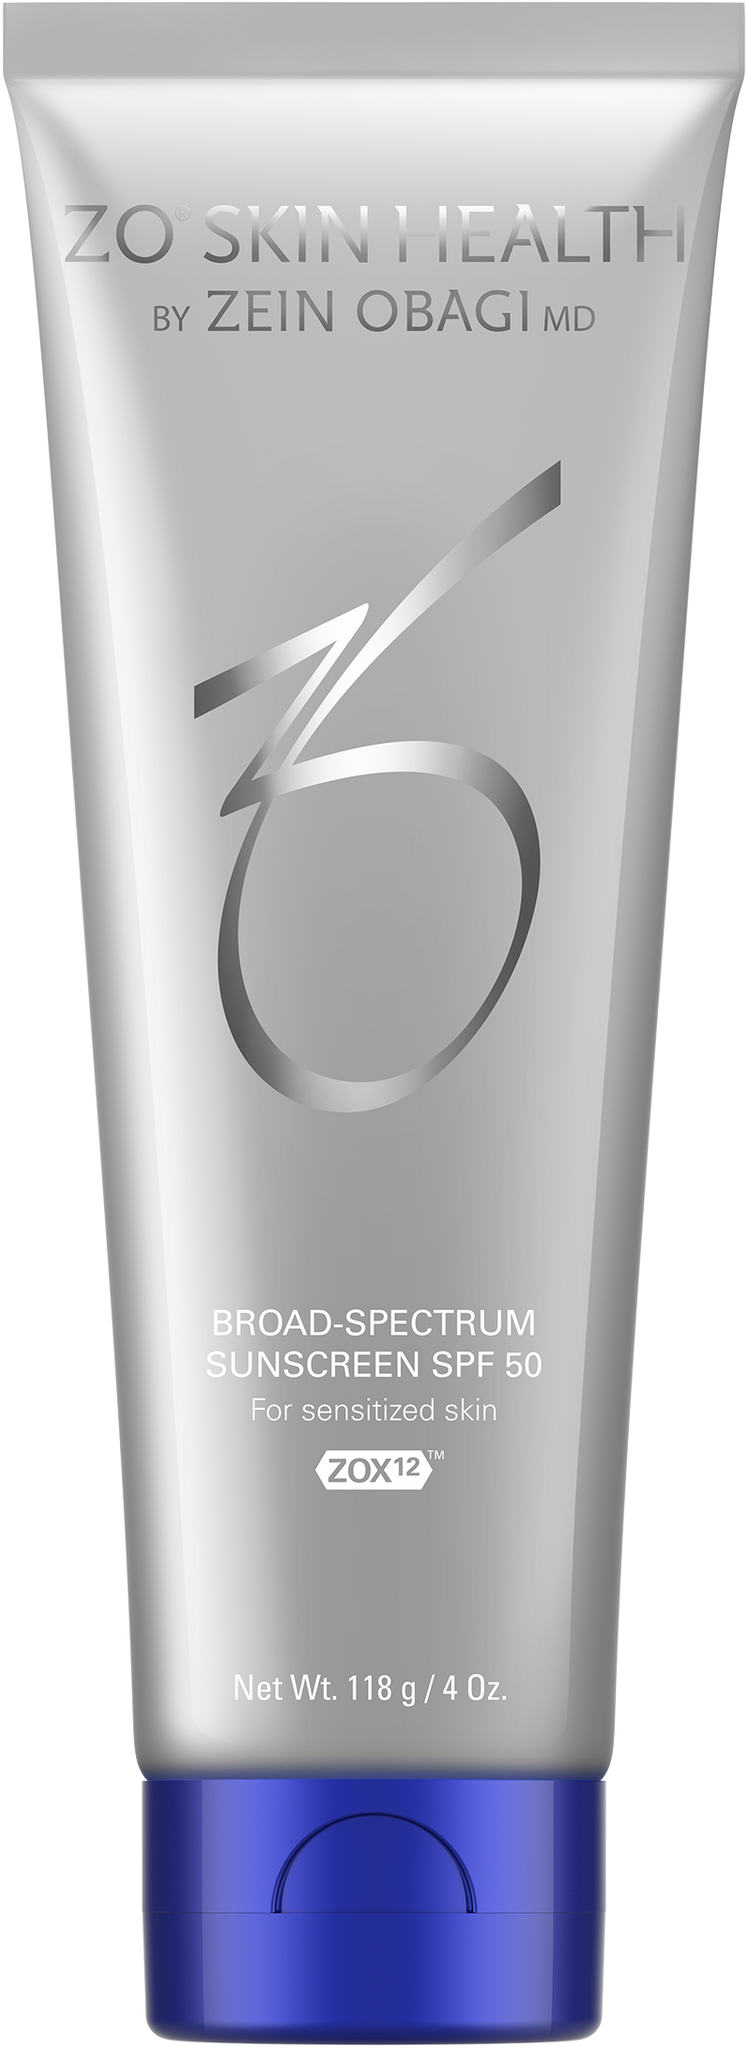 Zo Skin Health - Broad-Spectrum Sunscreen SPF 50